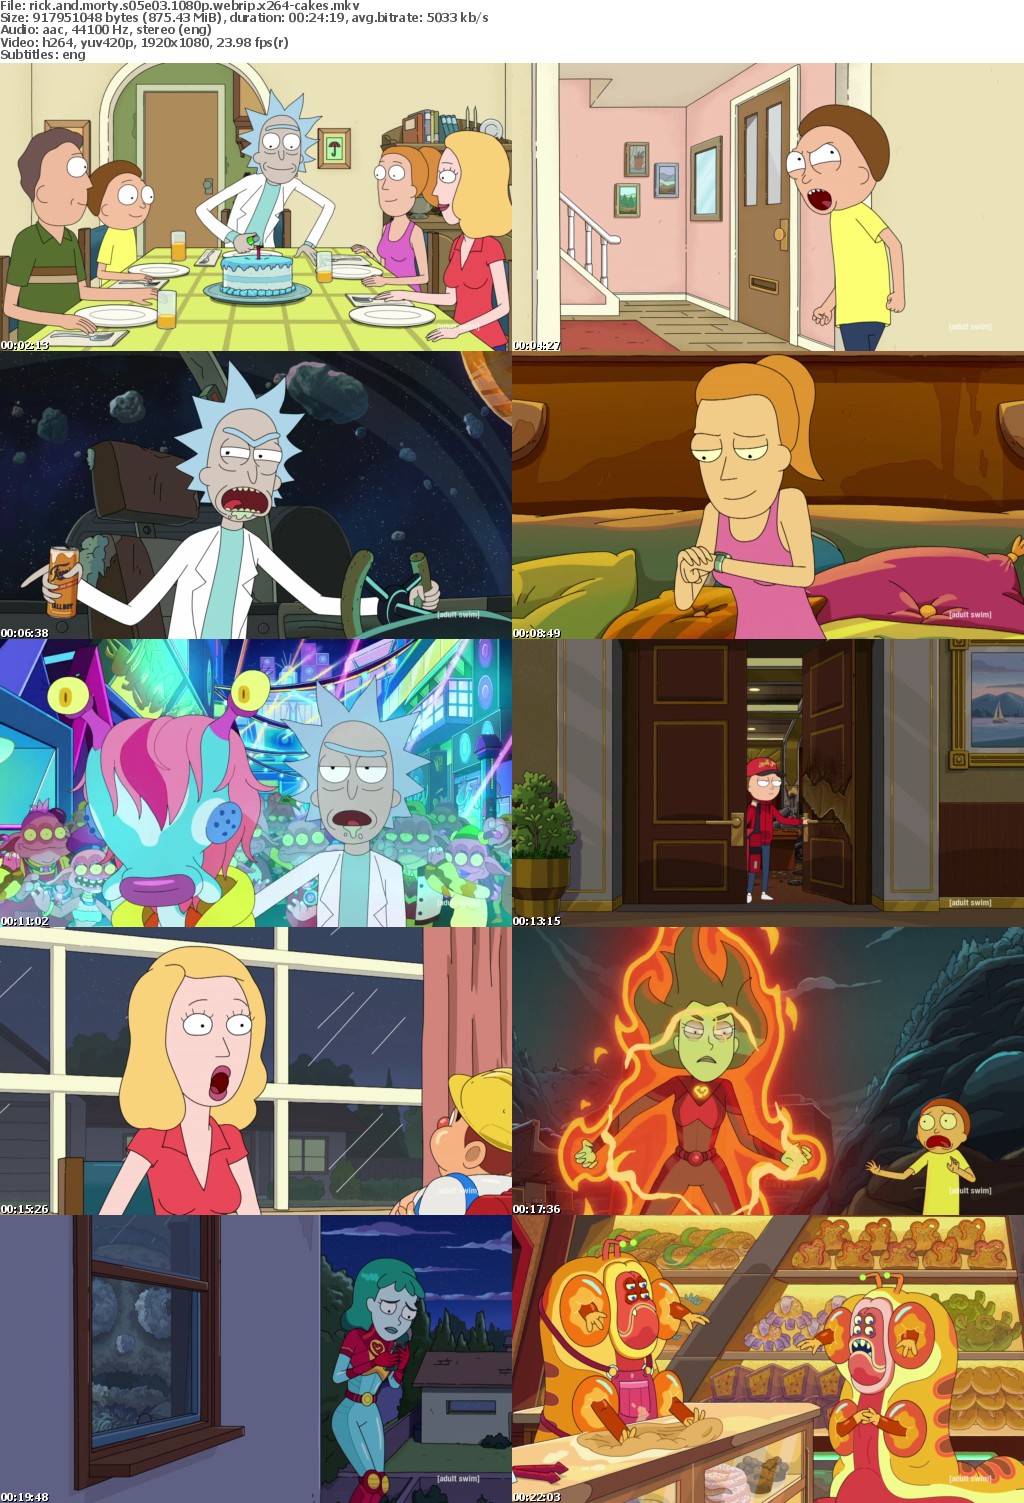 Rick and Morty S05E03 1080p WEBRip x264-CAKES